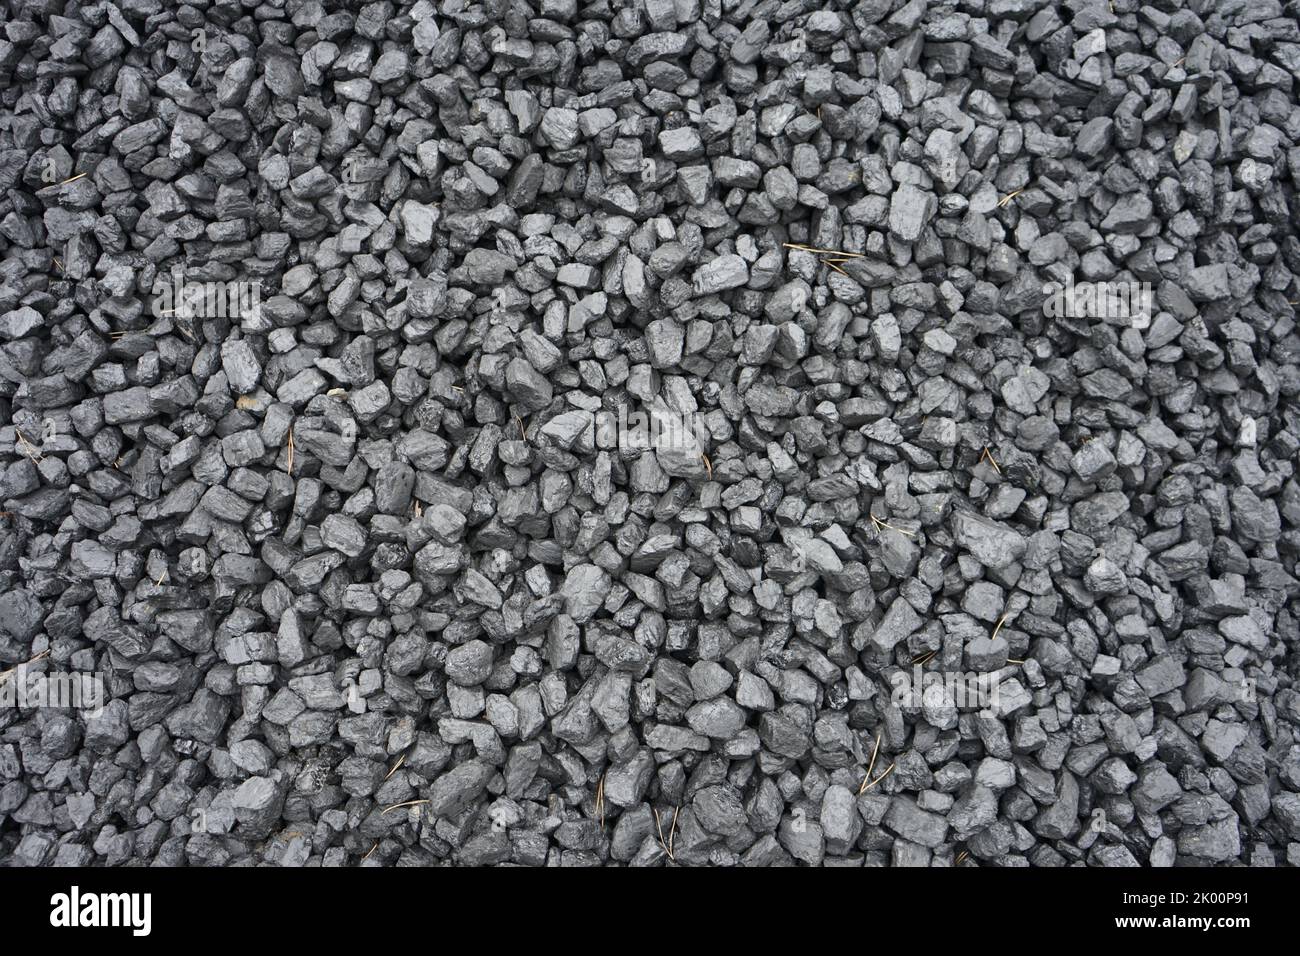 Coal depot - coal yard. Selling coal for home heating Stock Photo